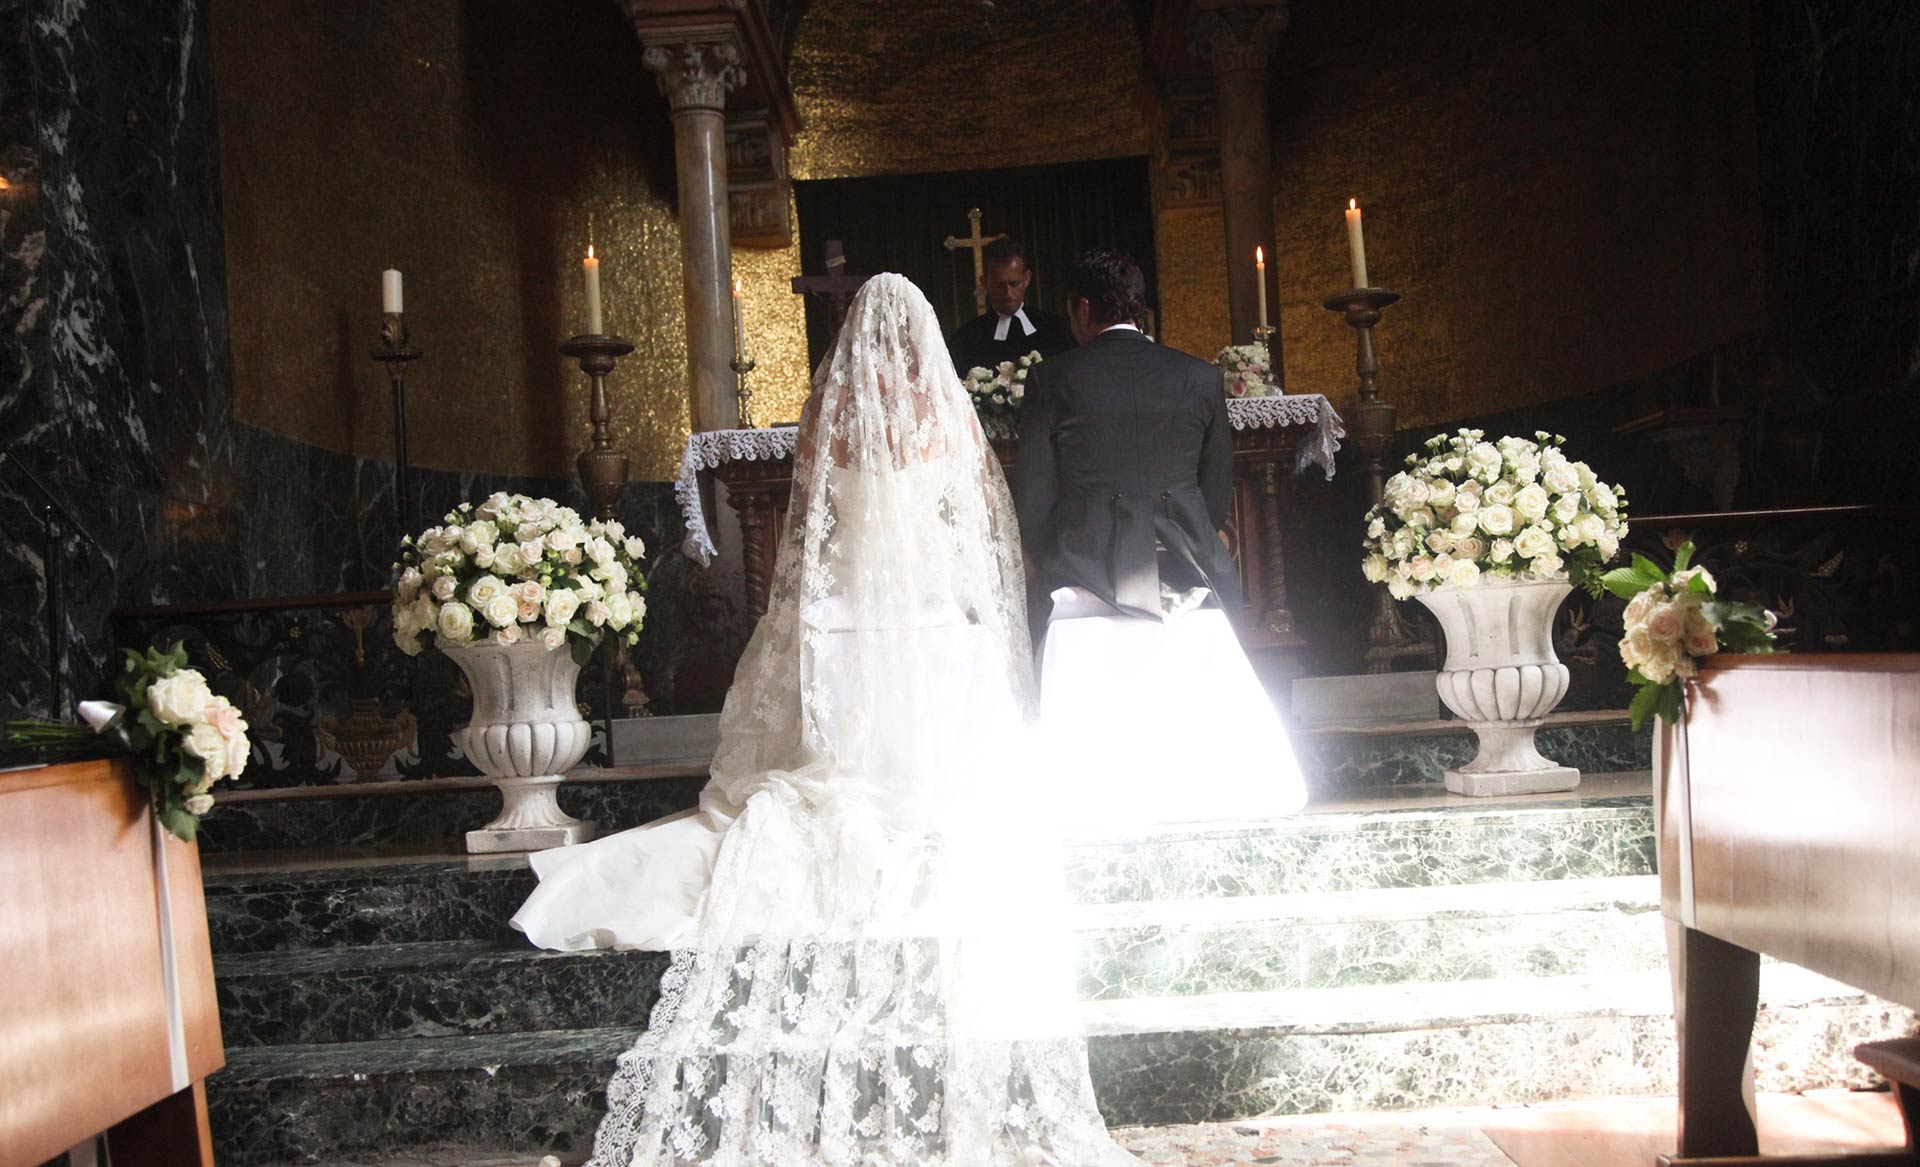 Protestant Wedding Ceremony in Italy